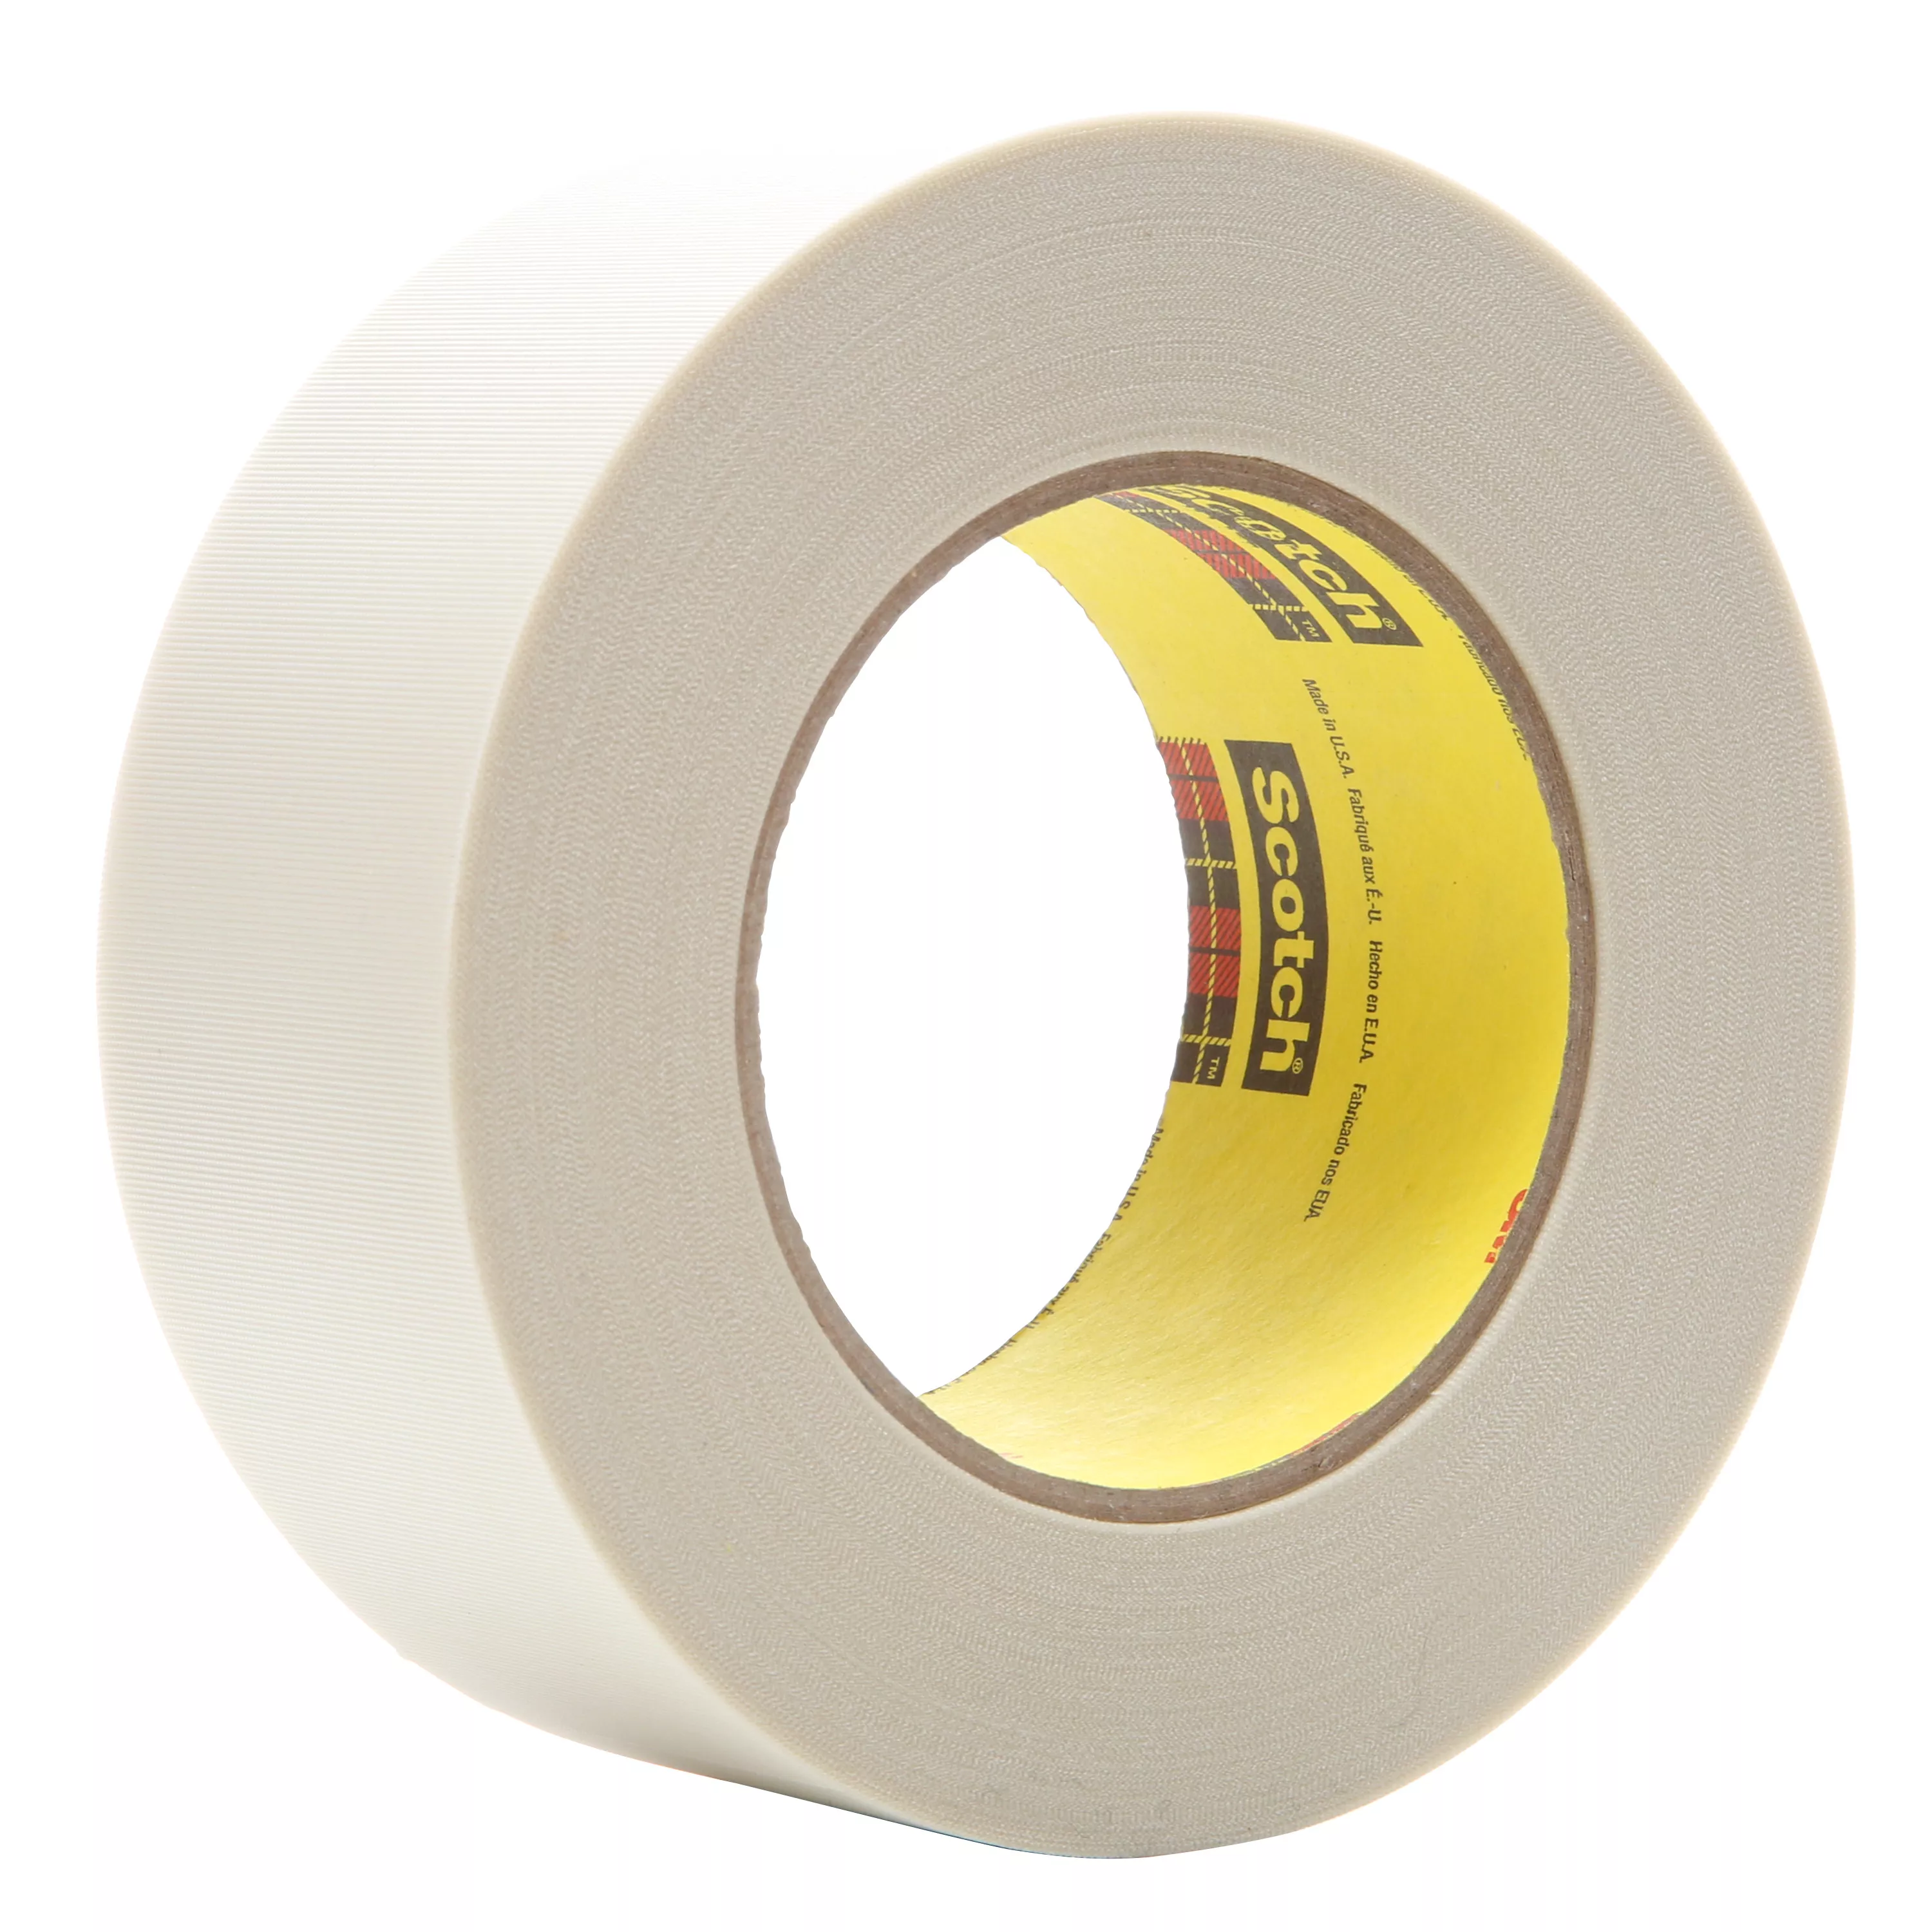 3M™ Glass Cloth Tape 361, White, 2 in x 36 yd, 6.4 mil, 24 rolls per
case, Plastic Core